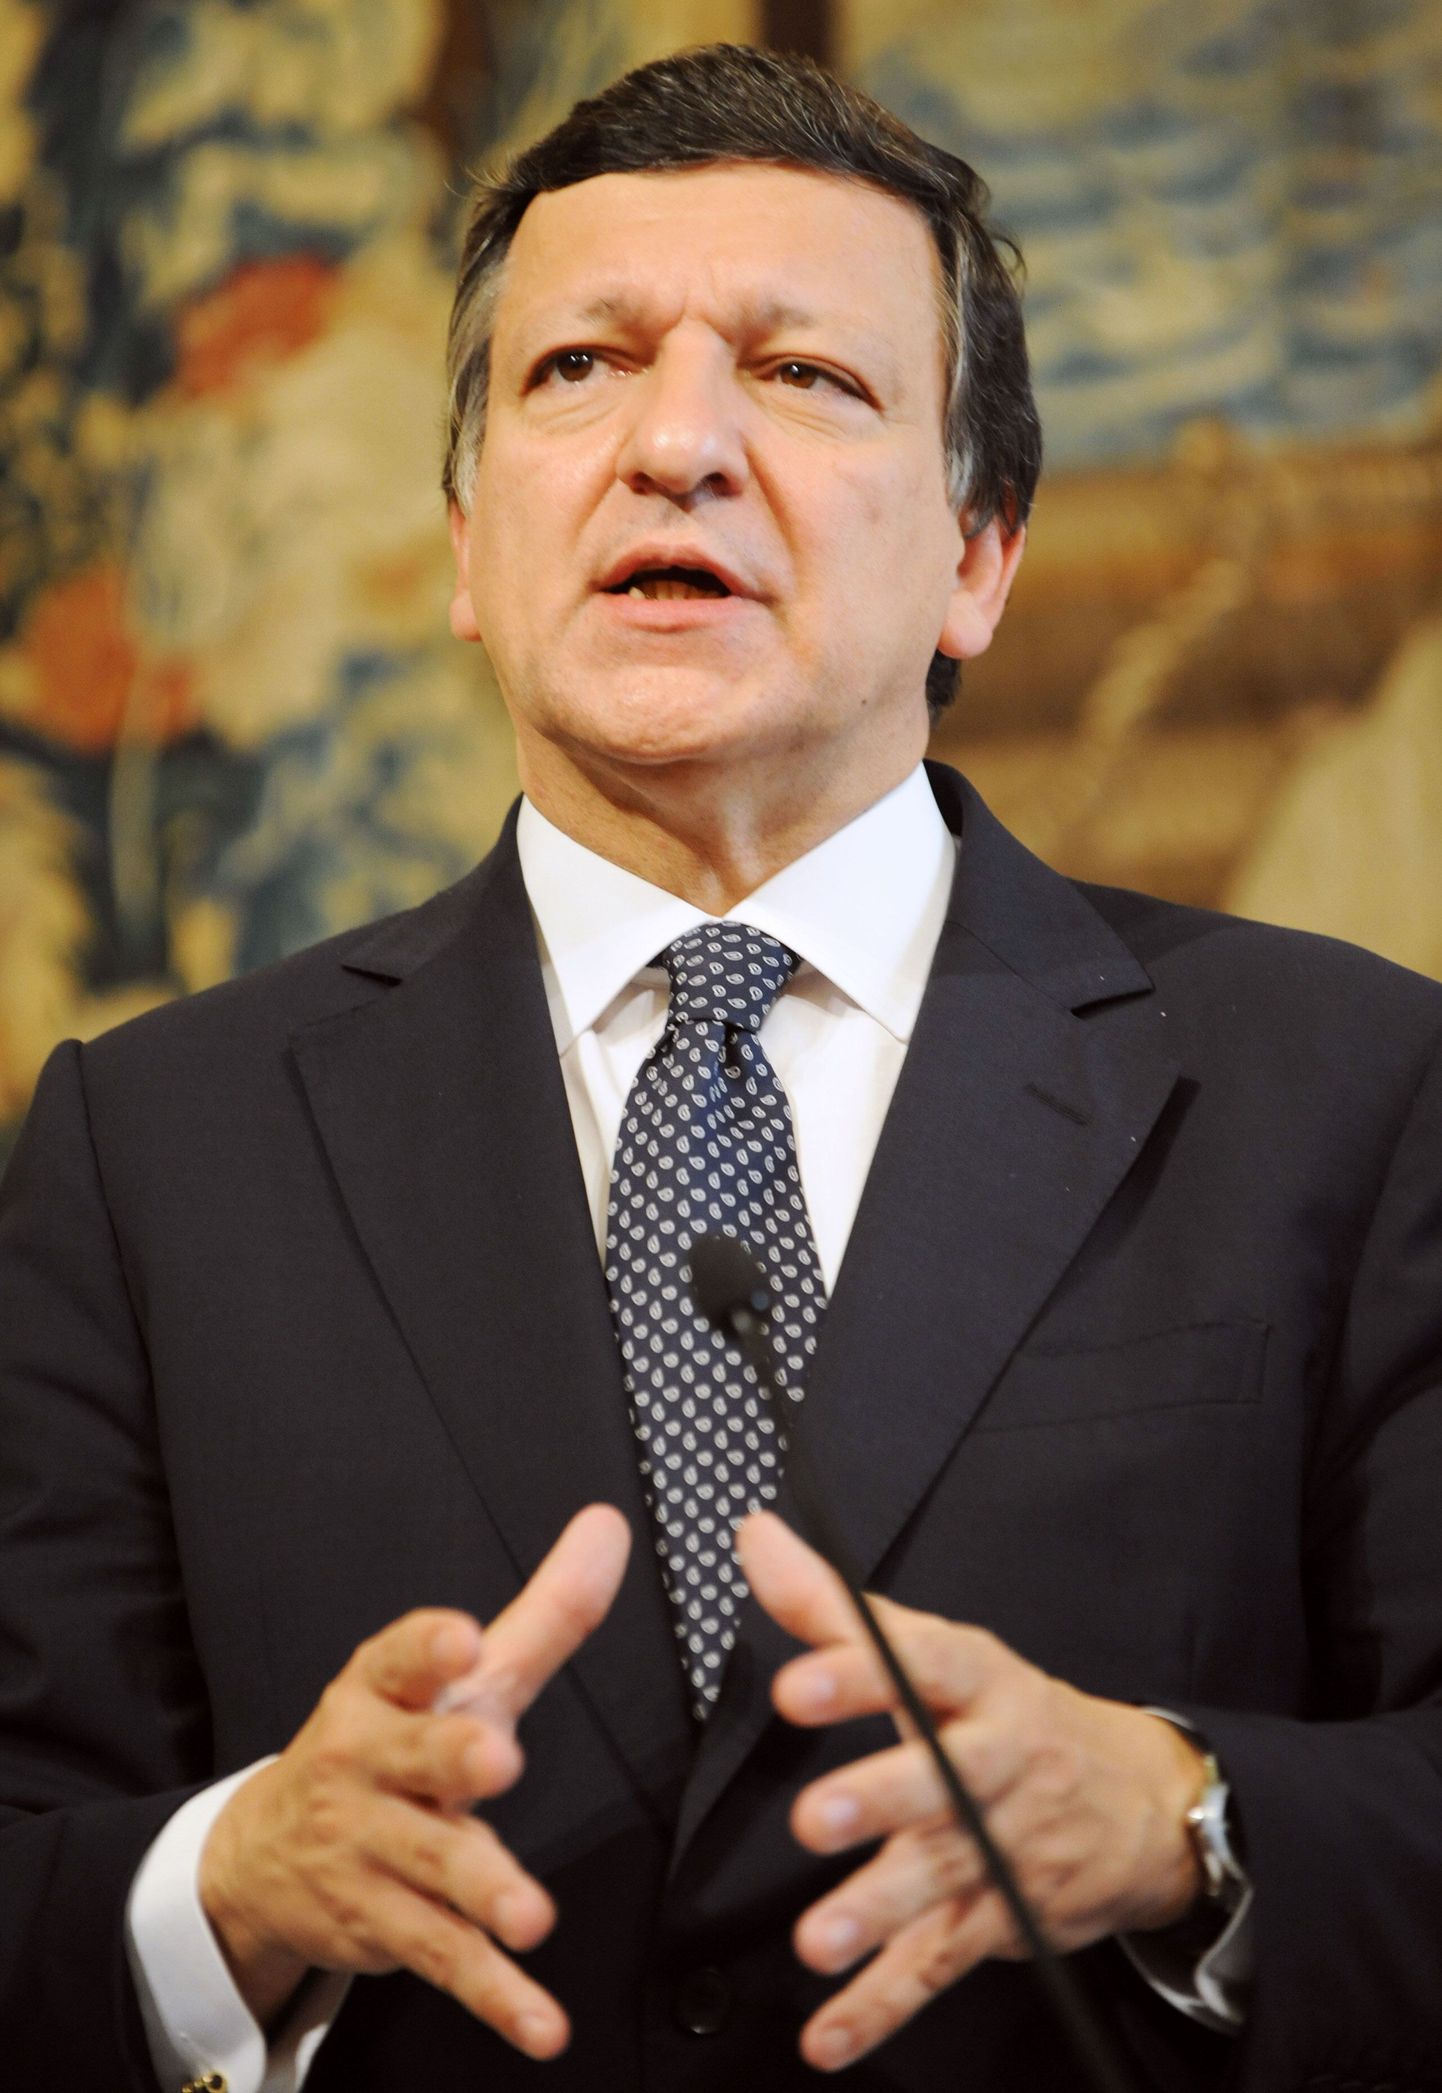 Euroopa Komisjoni president Jose Manuel Barroso.